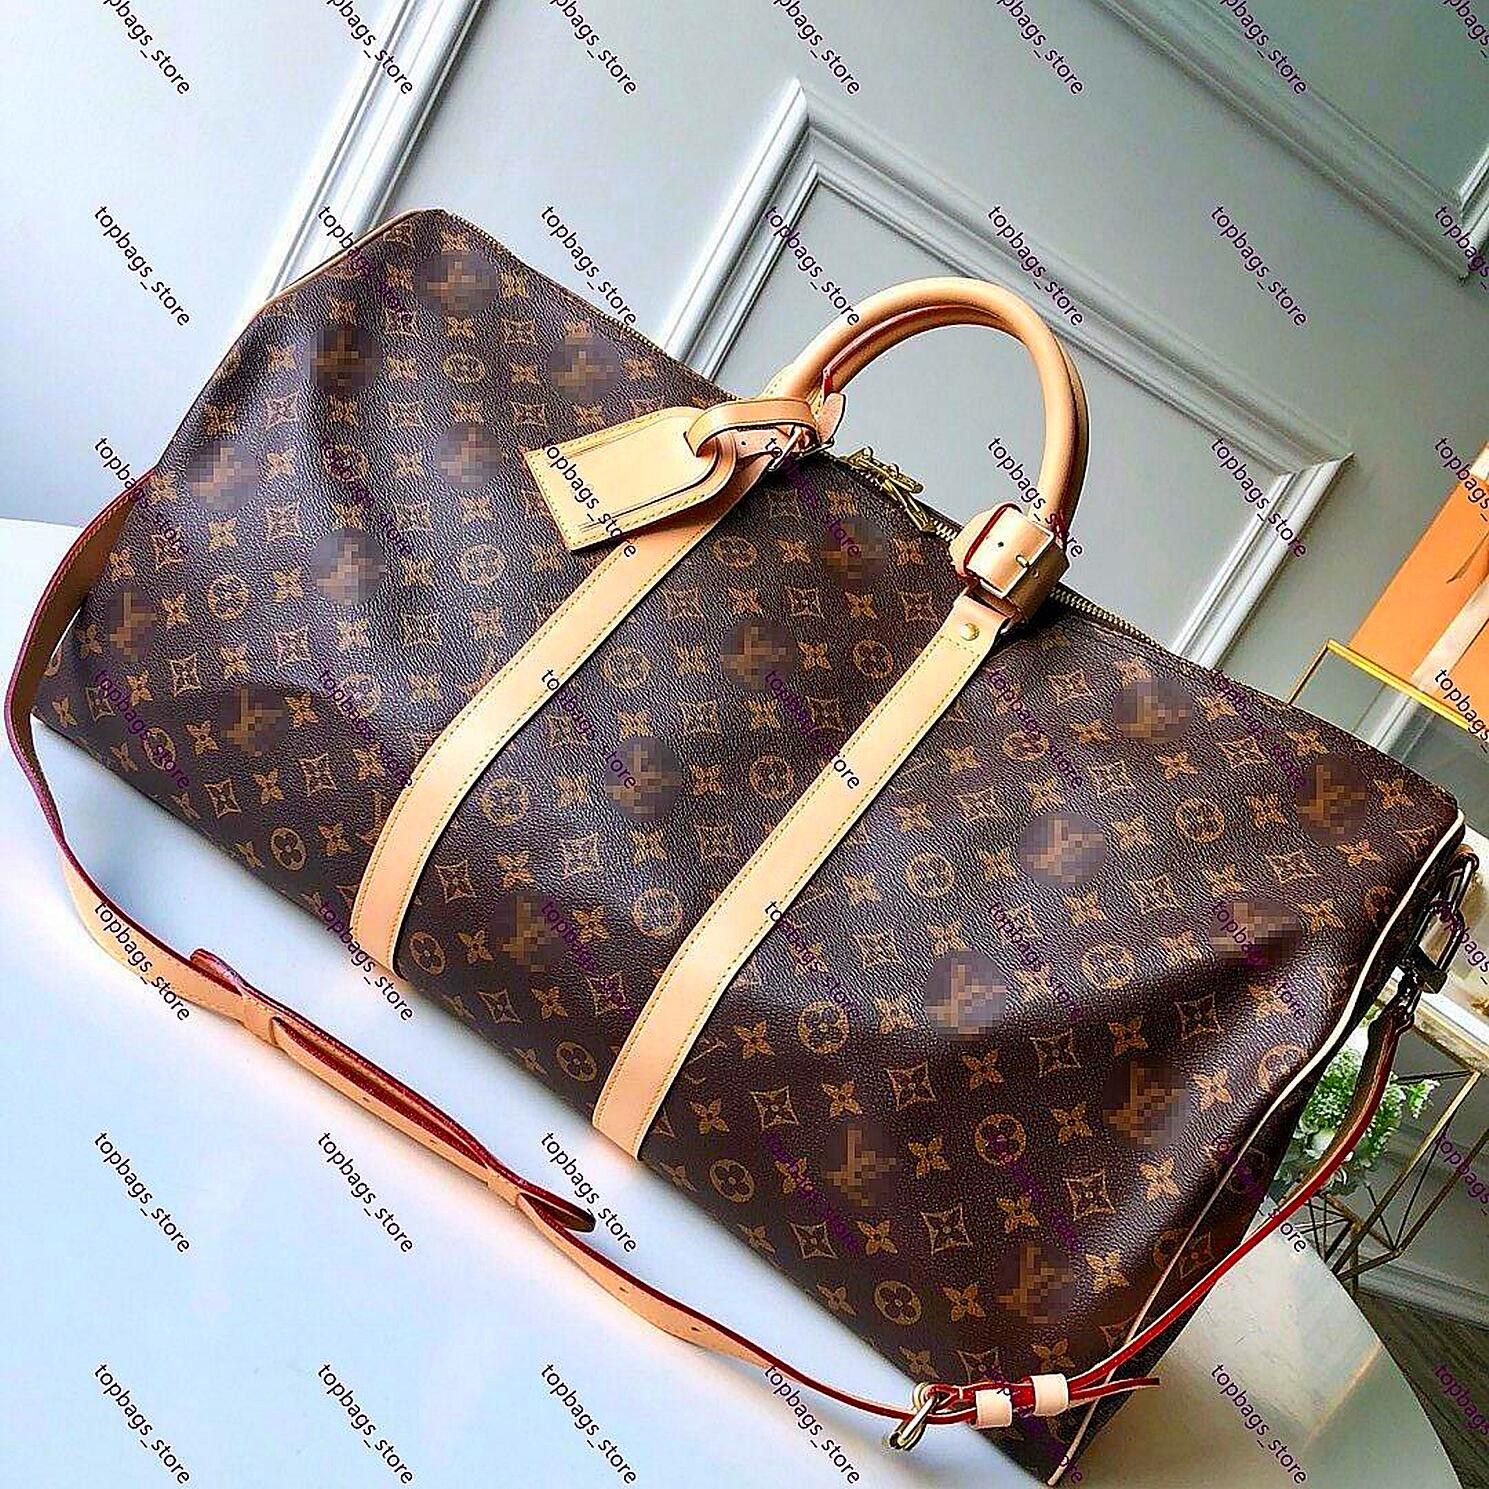 

LVS Louiseity Vuttons Viutonity GGs Designers fashion duffel bags luxury men female travel bags leather men backpack school bag handbags lar